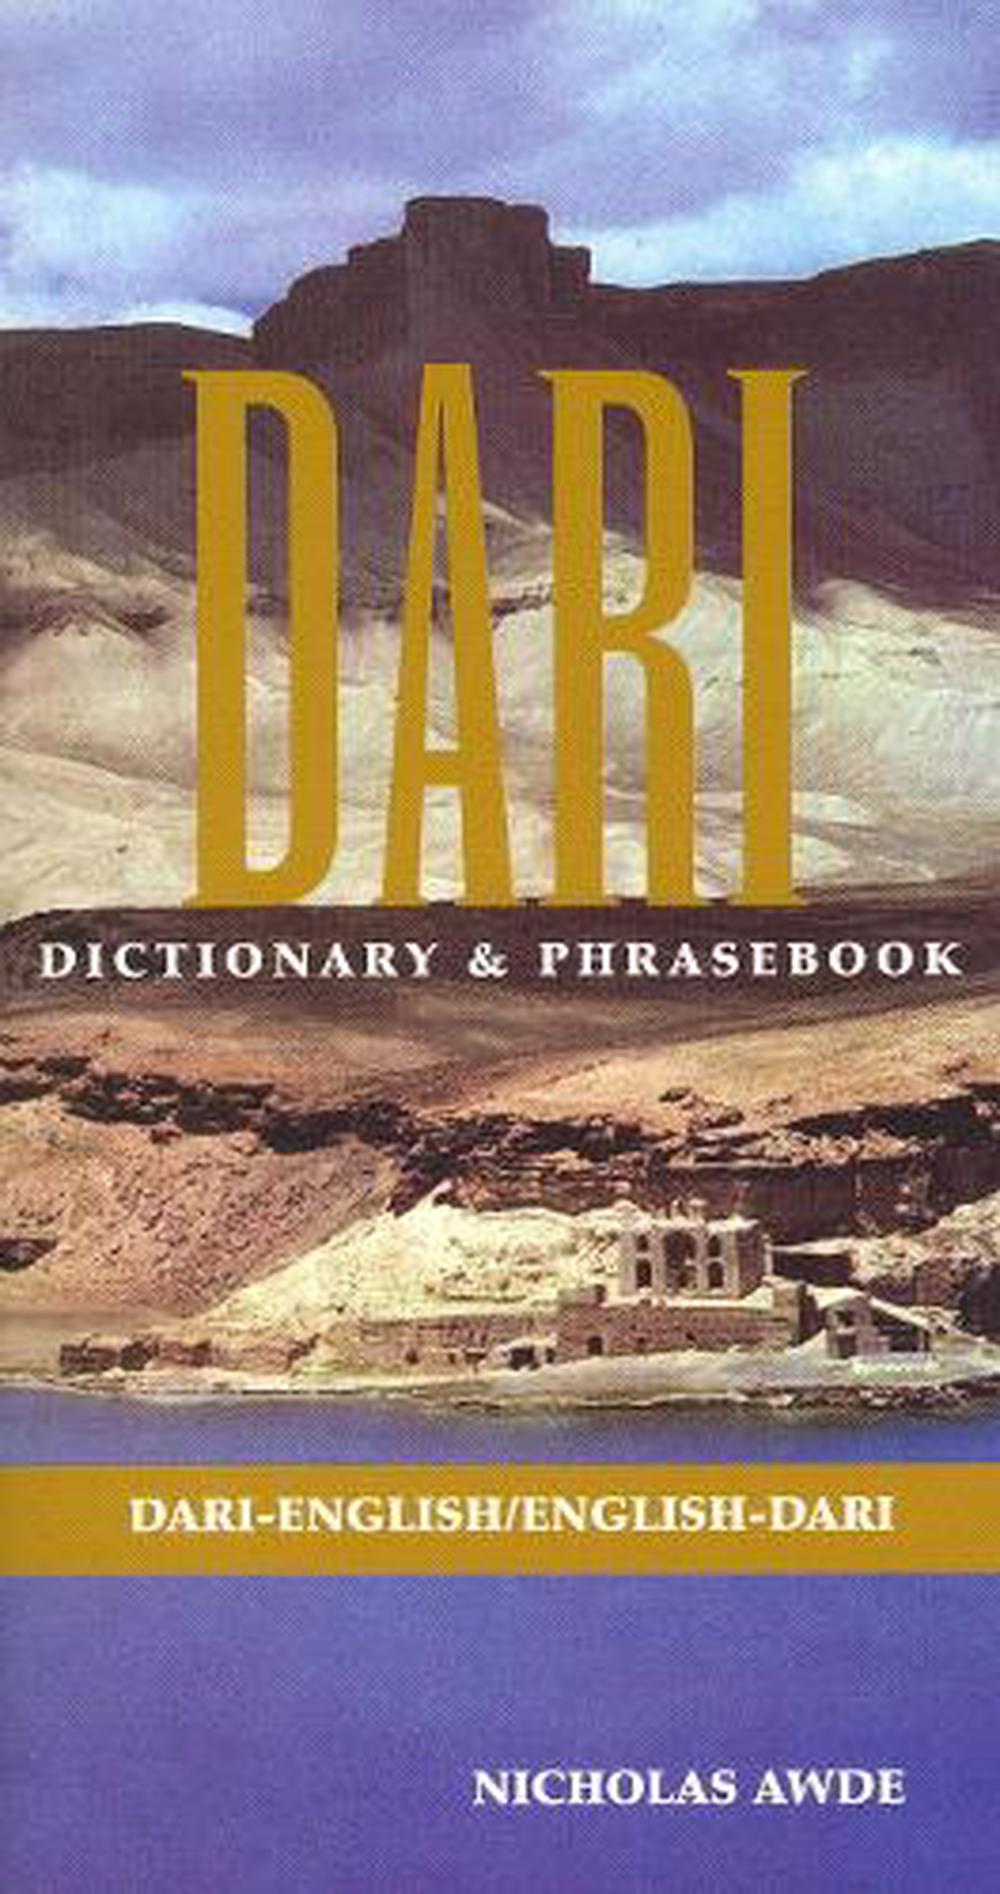 The　Nicholas　at　Dari-English/English-Dari　Paperback,　Dictionary　online　Buy　Phrasebook　by　9780781809719　Awde,　Nile